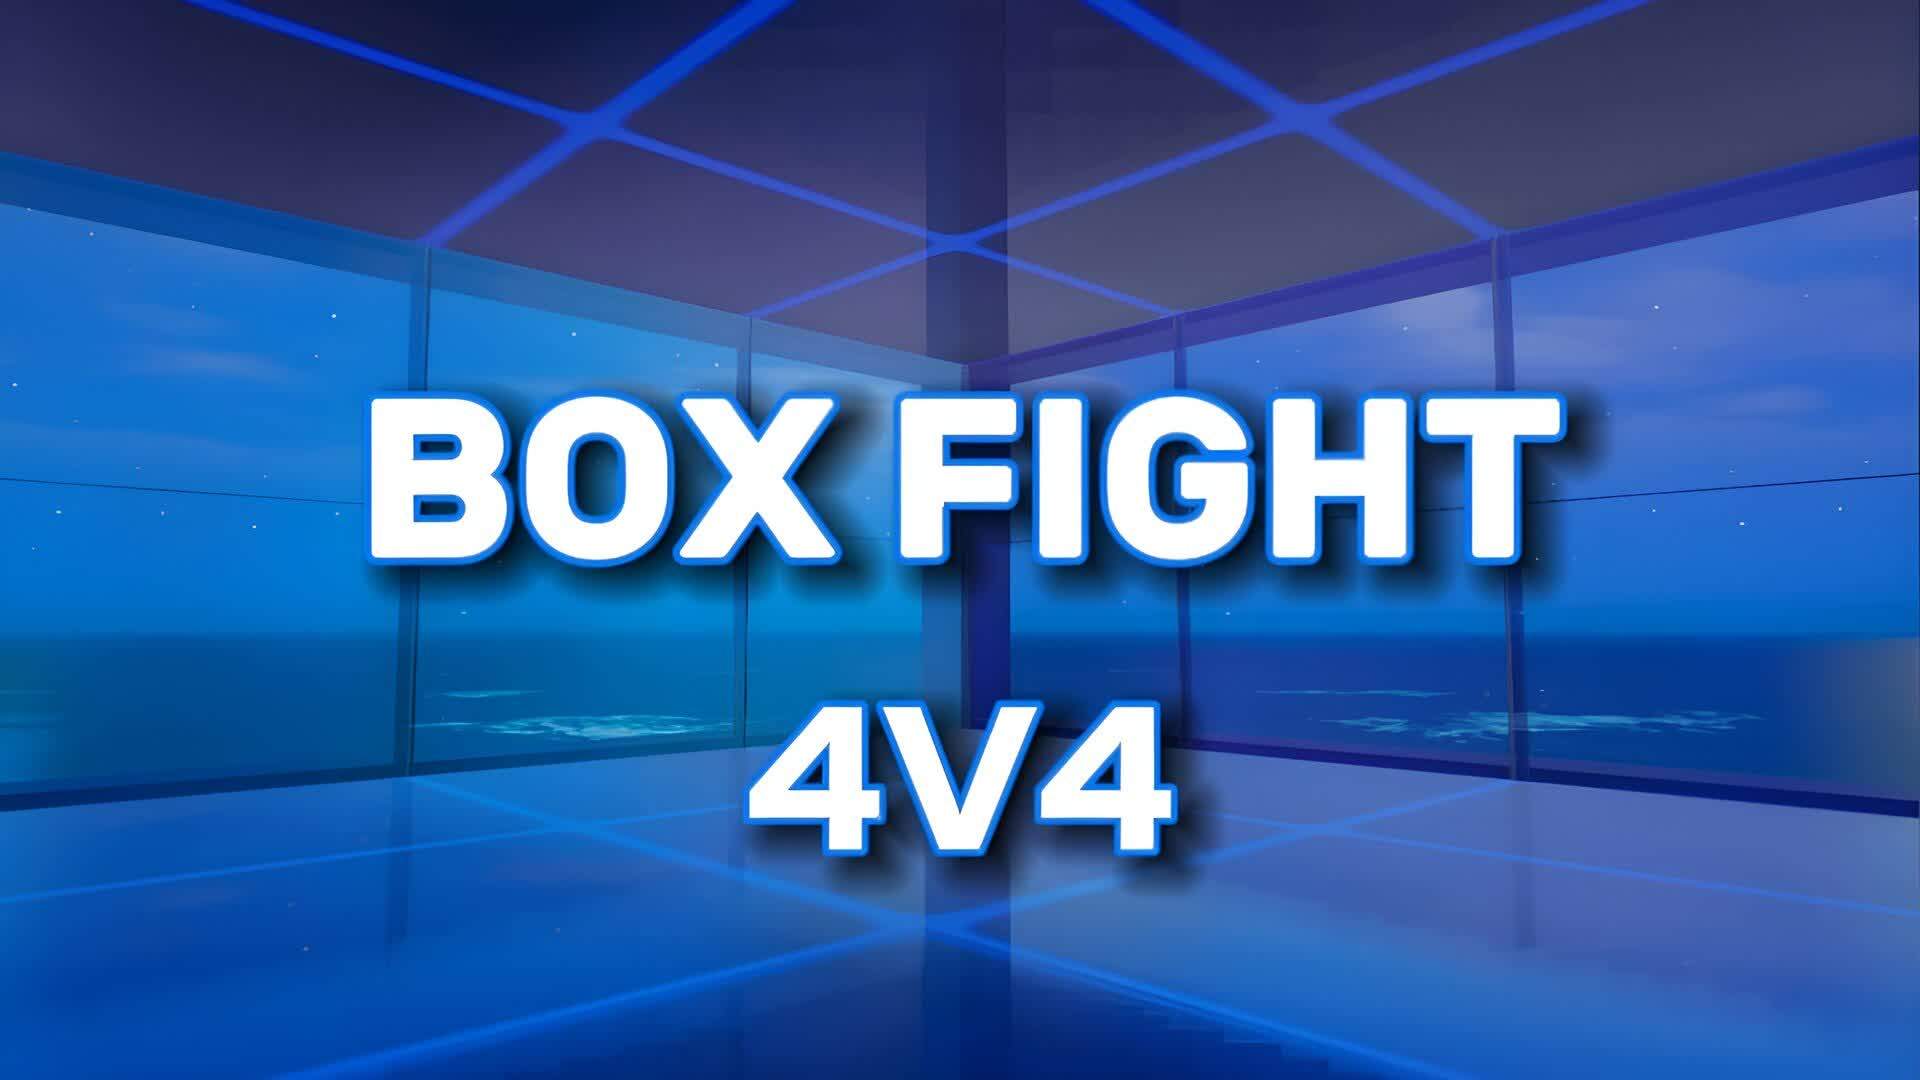 BOX FIGHT 4v4